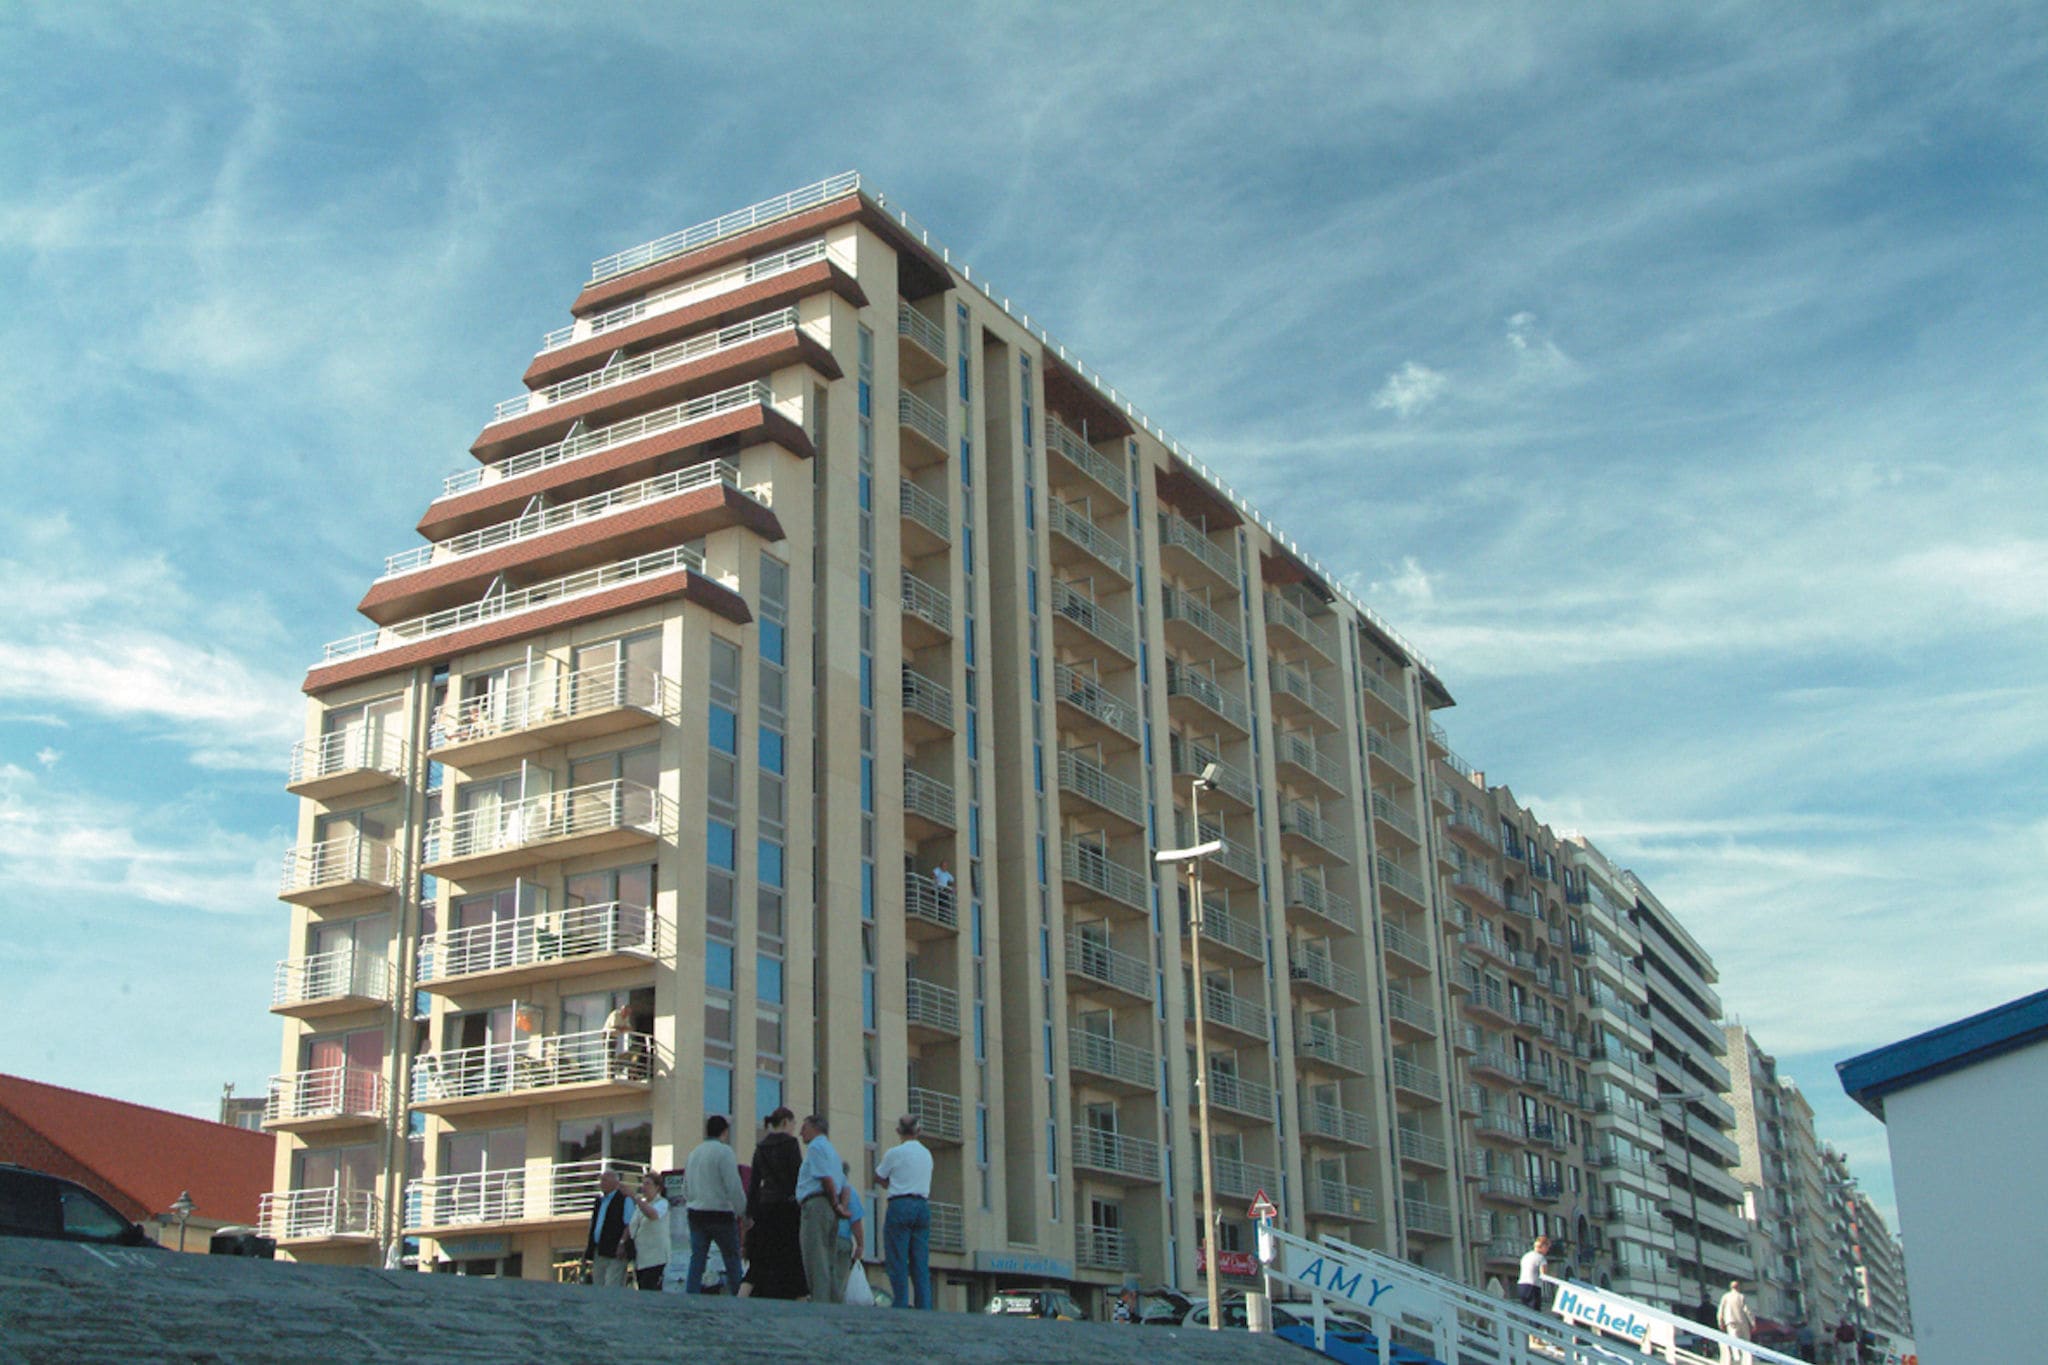 Mooi penthouse met fenomenaal zeezicht in Blankeberge